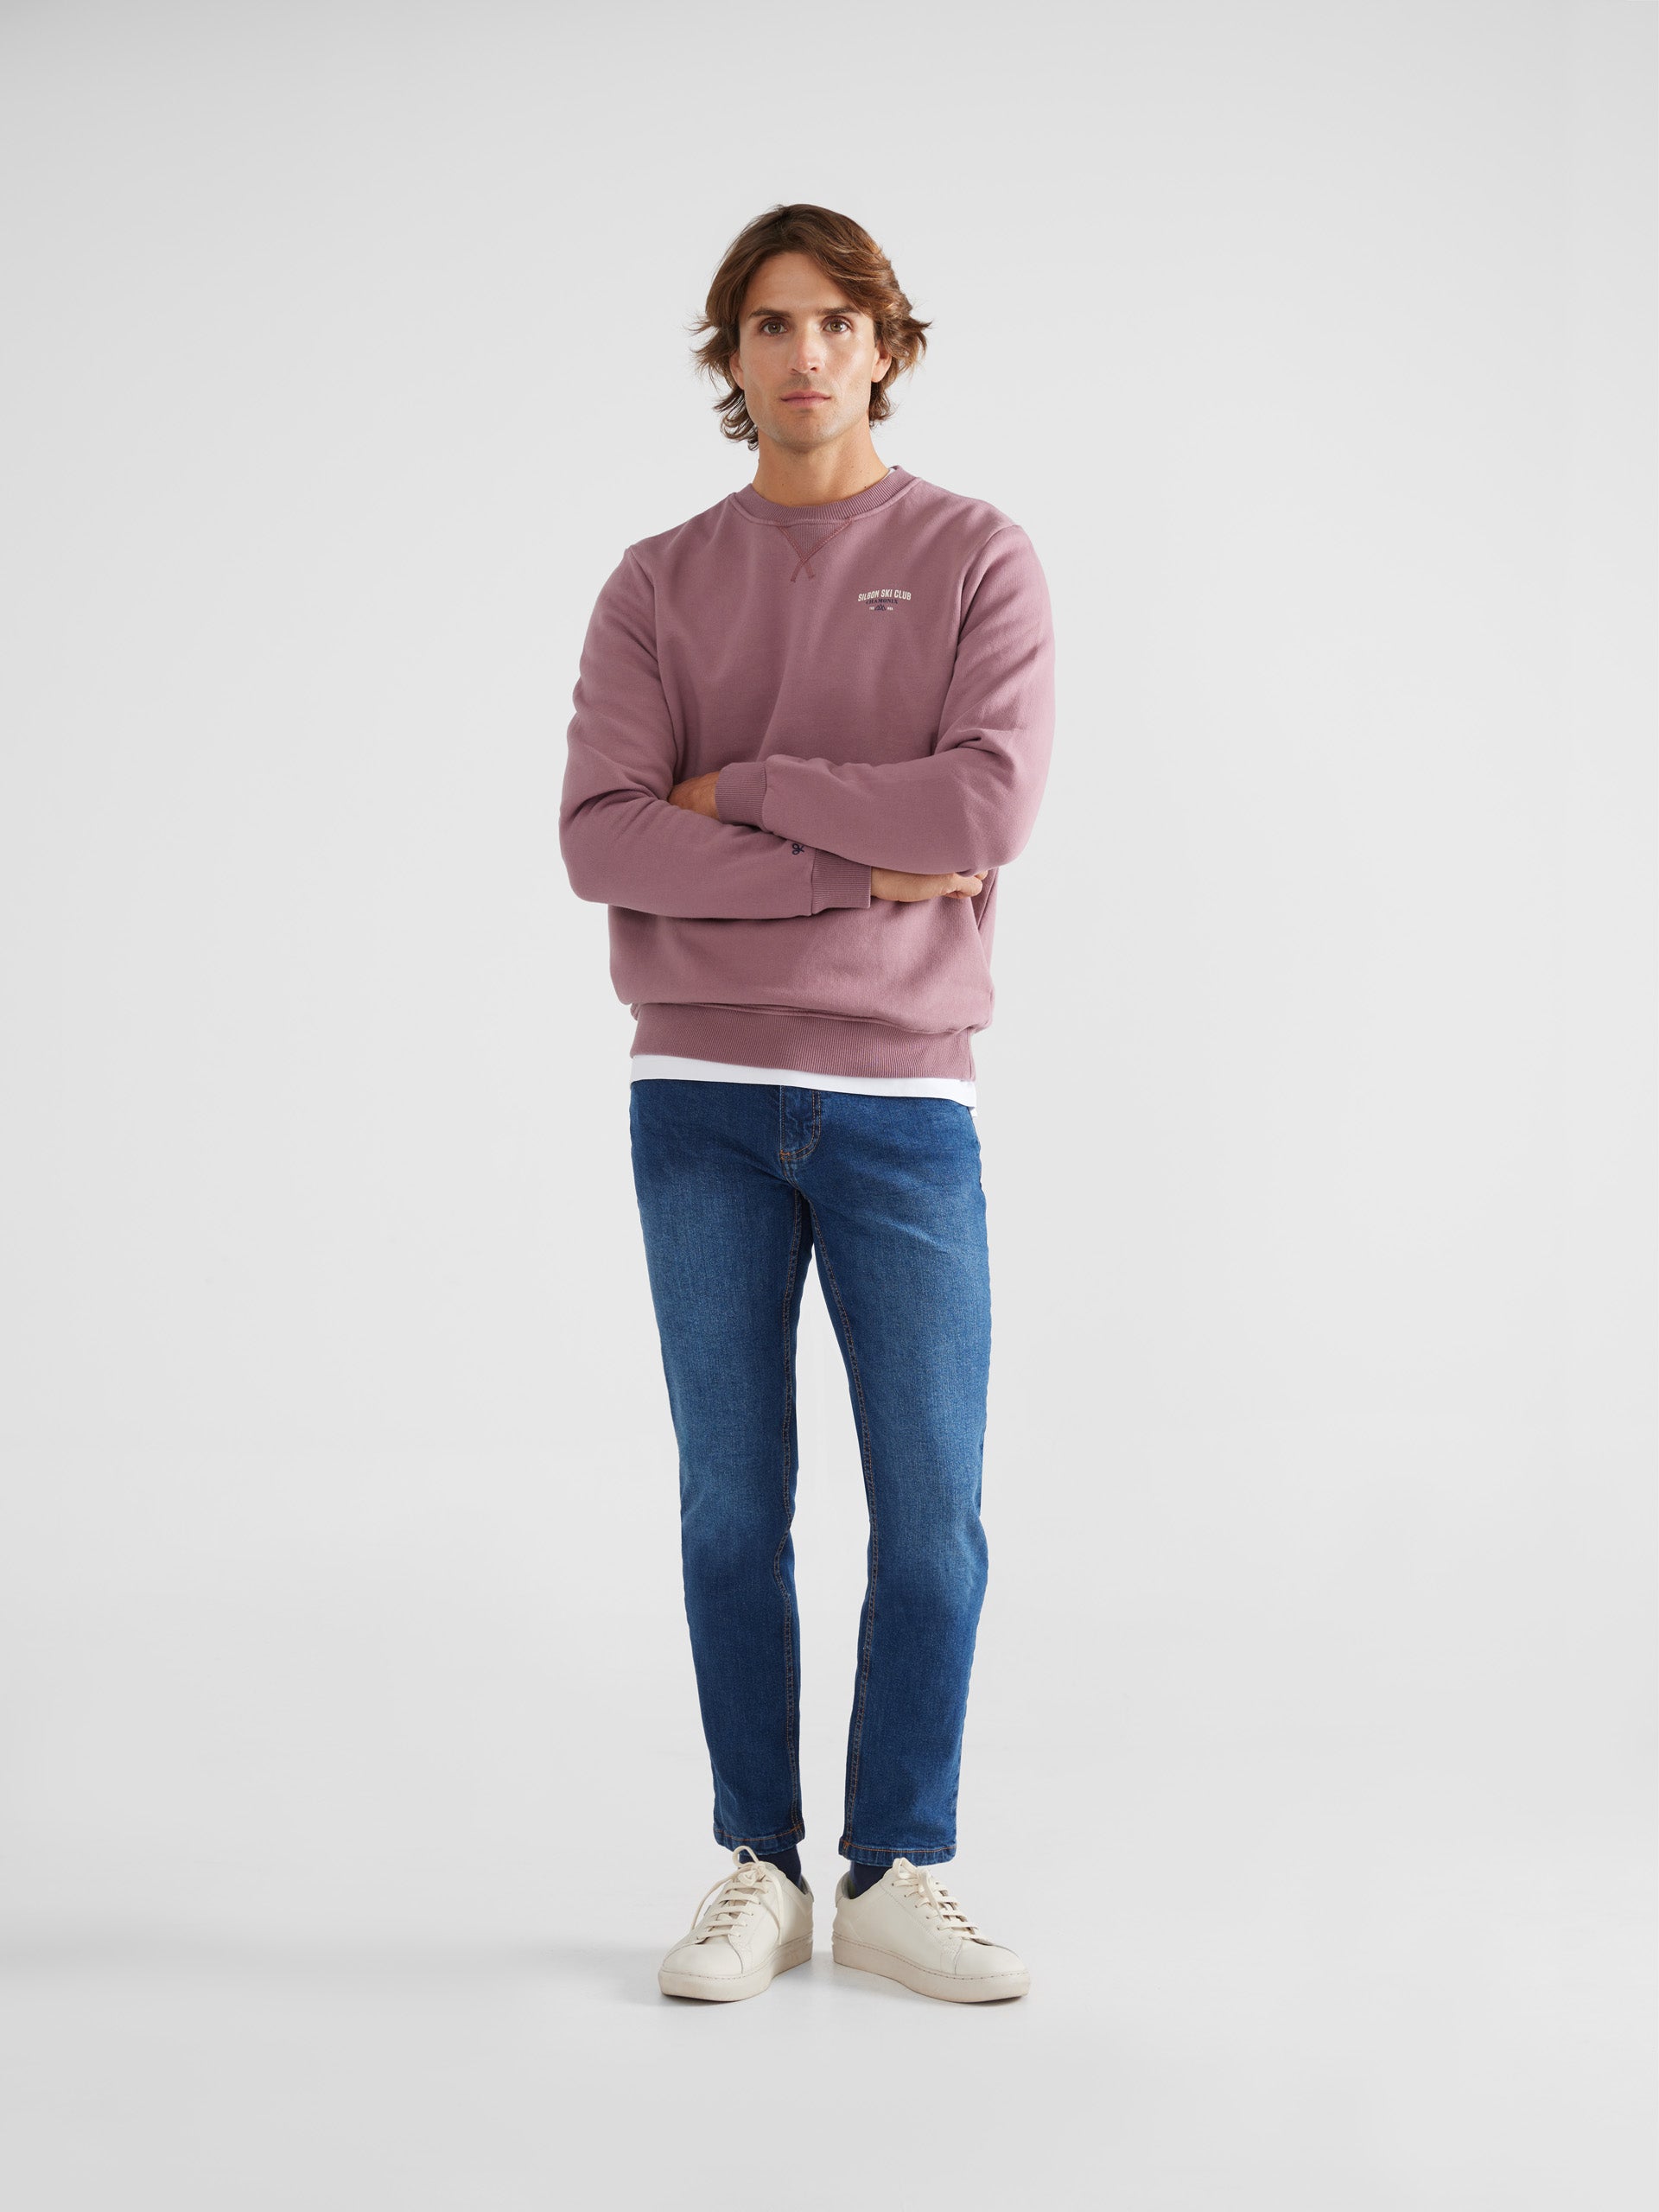 Purple ski club sweatshirt